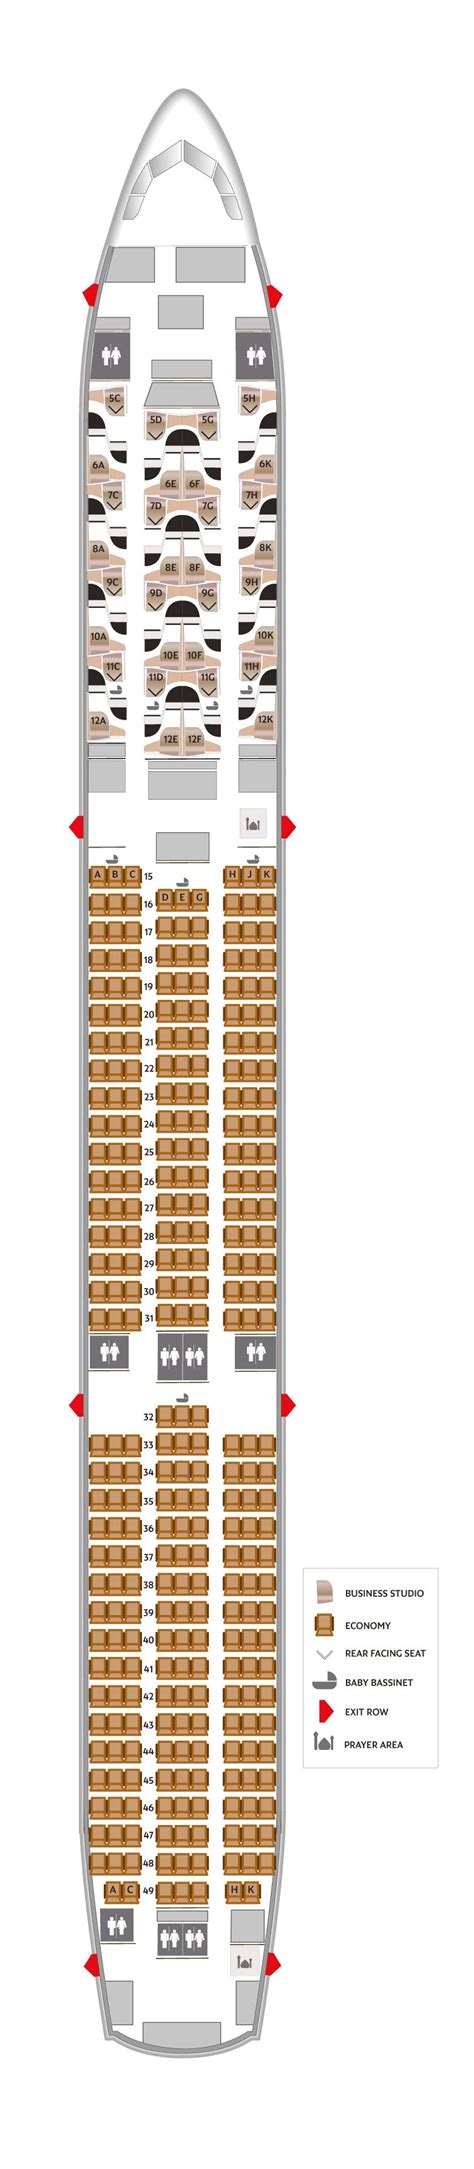 boeing dreamliner series 10 787 seating chart